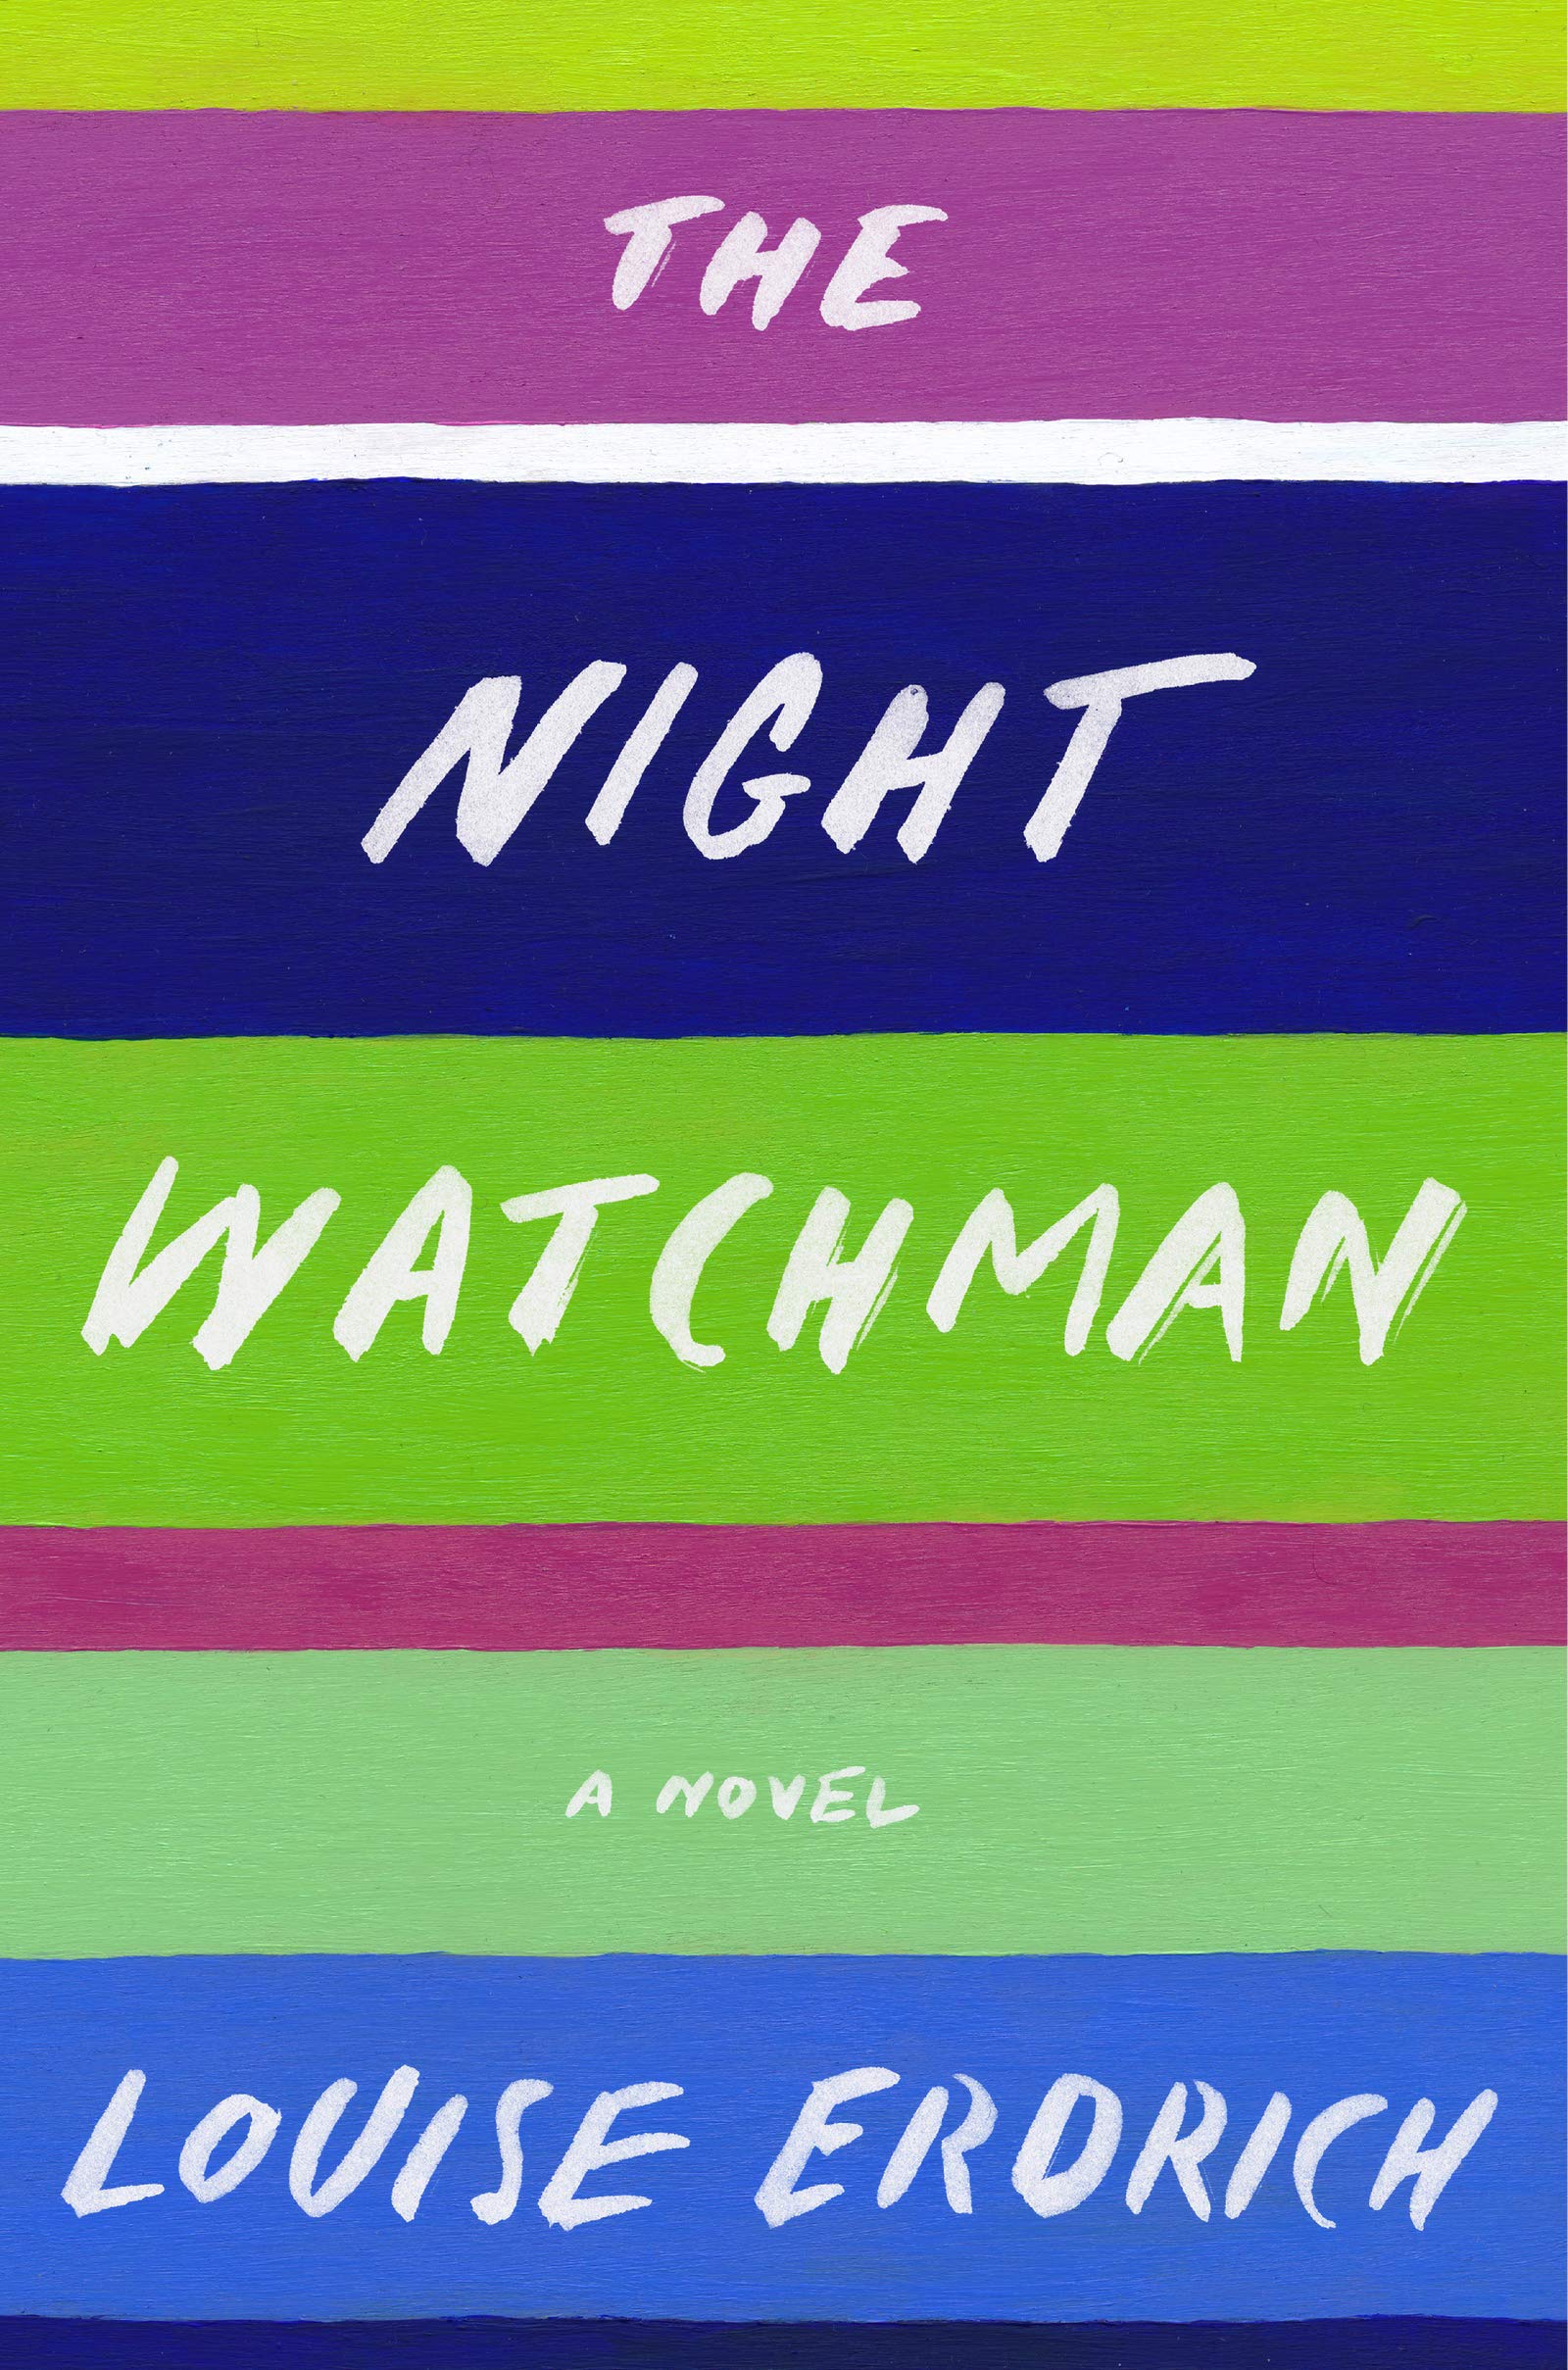 the night watchman essay